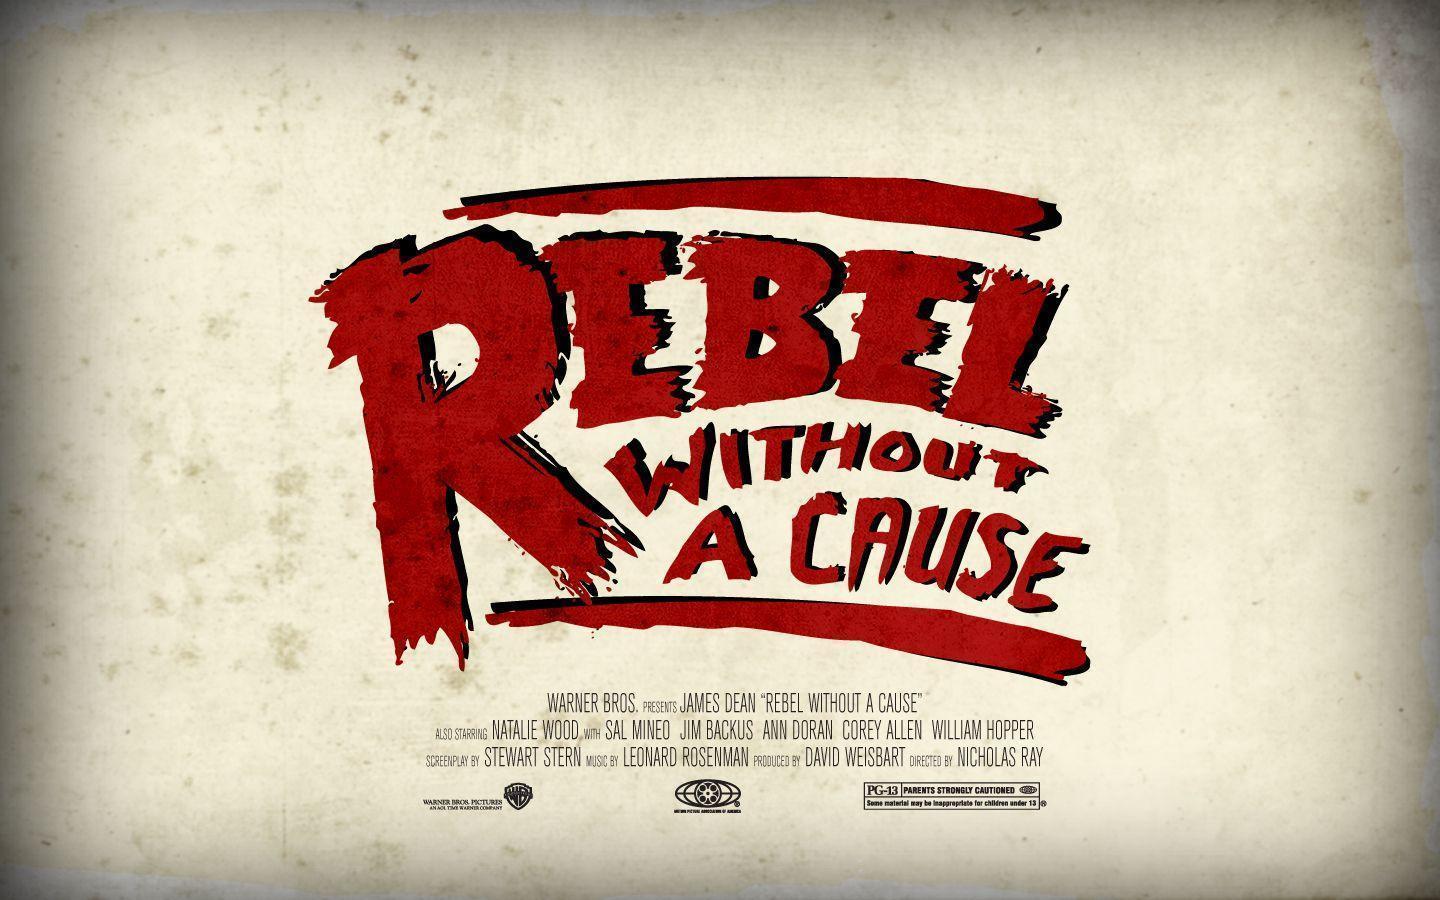 Rebel Image Wallpaper. Rebel wallpaper Without a Cause